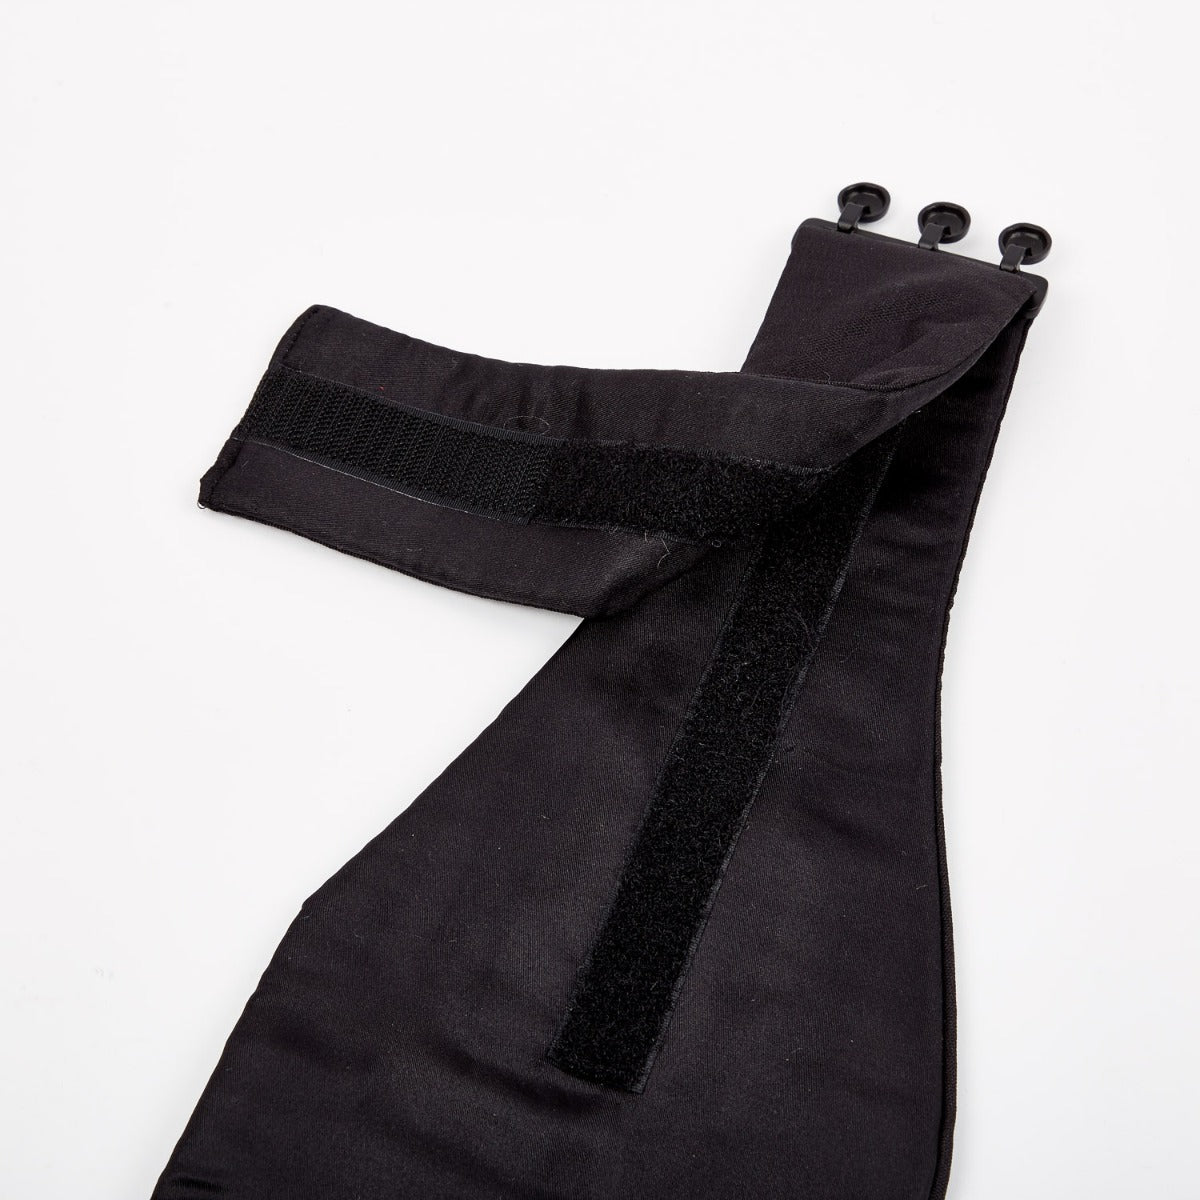 A Sovereign Grade Black Barathea Cummerbund by KirbyAllison.com, with a zipper on it, perfect as a formalwear accessory.